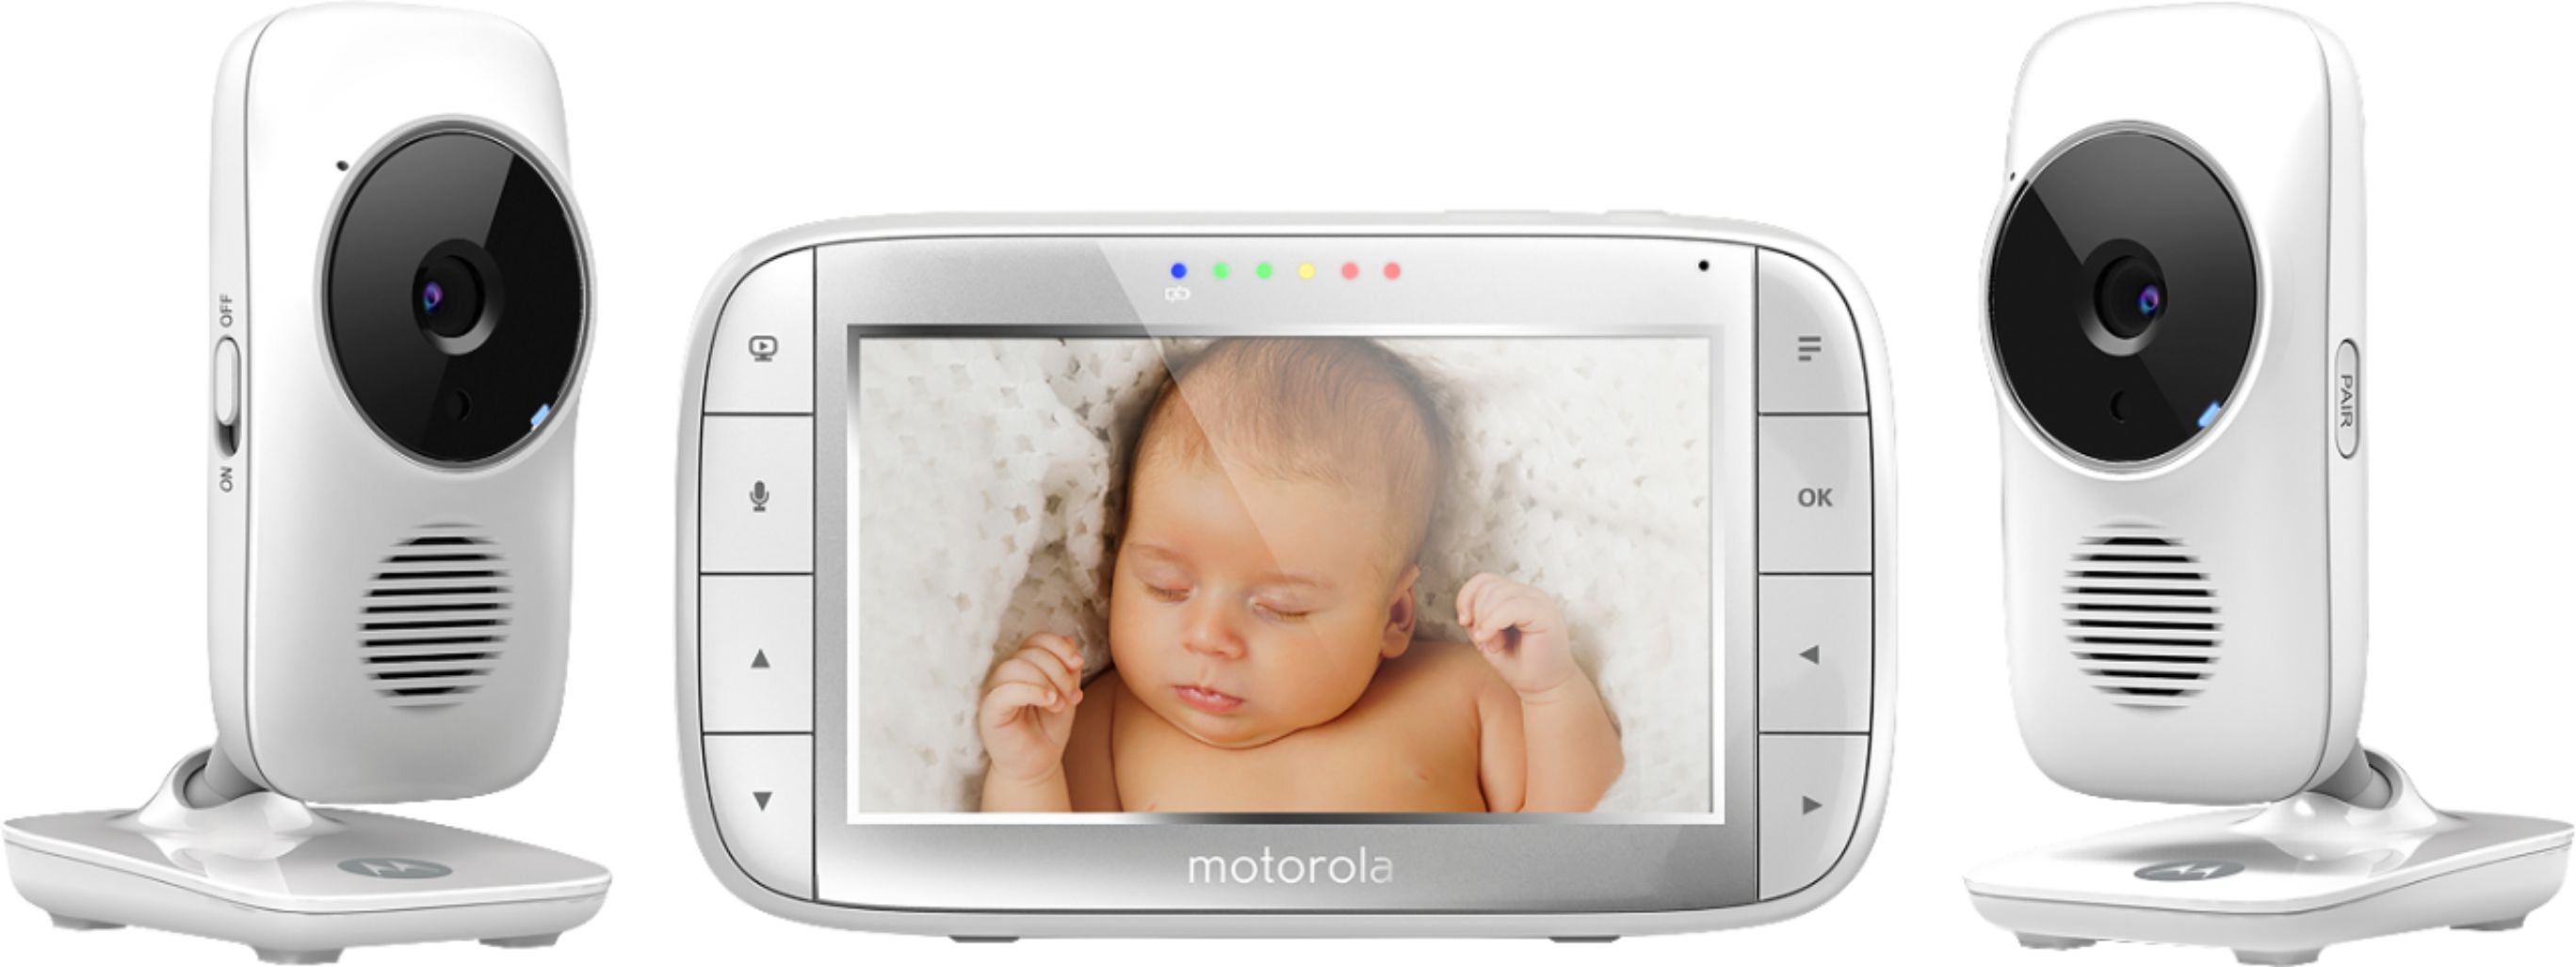 motorola split screen baby monitor